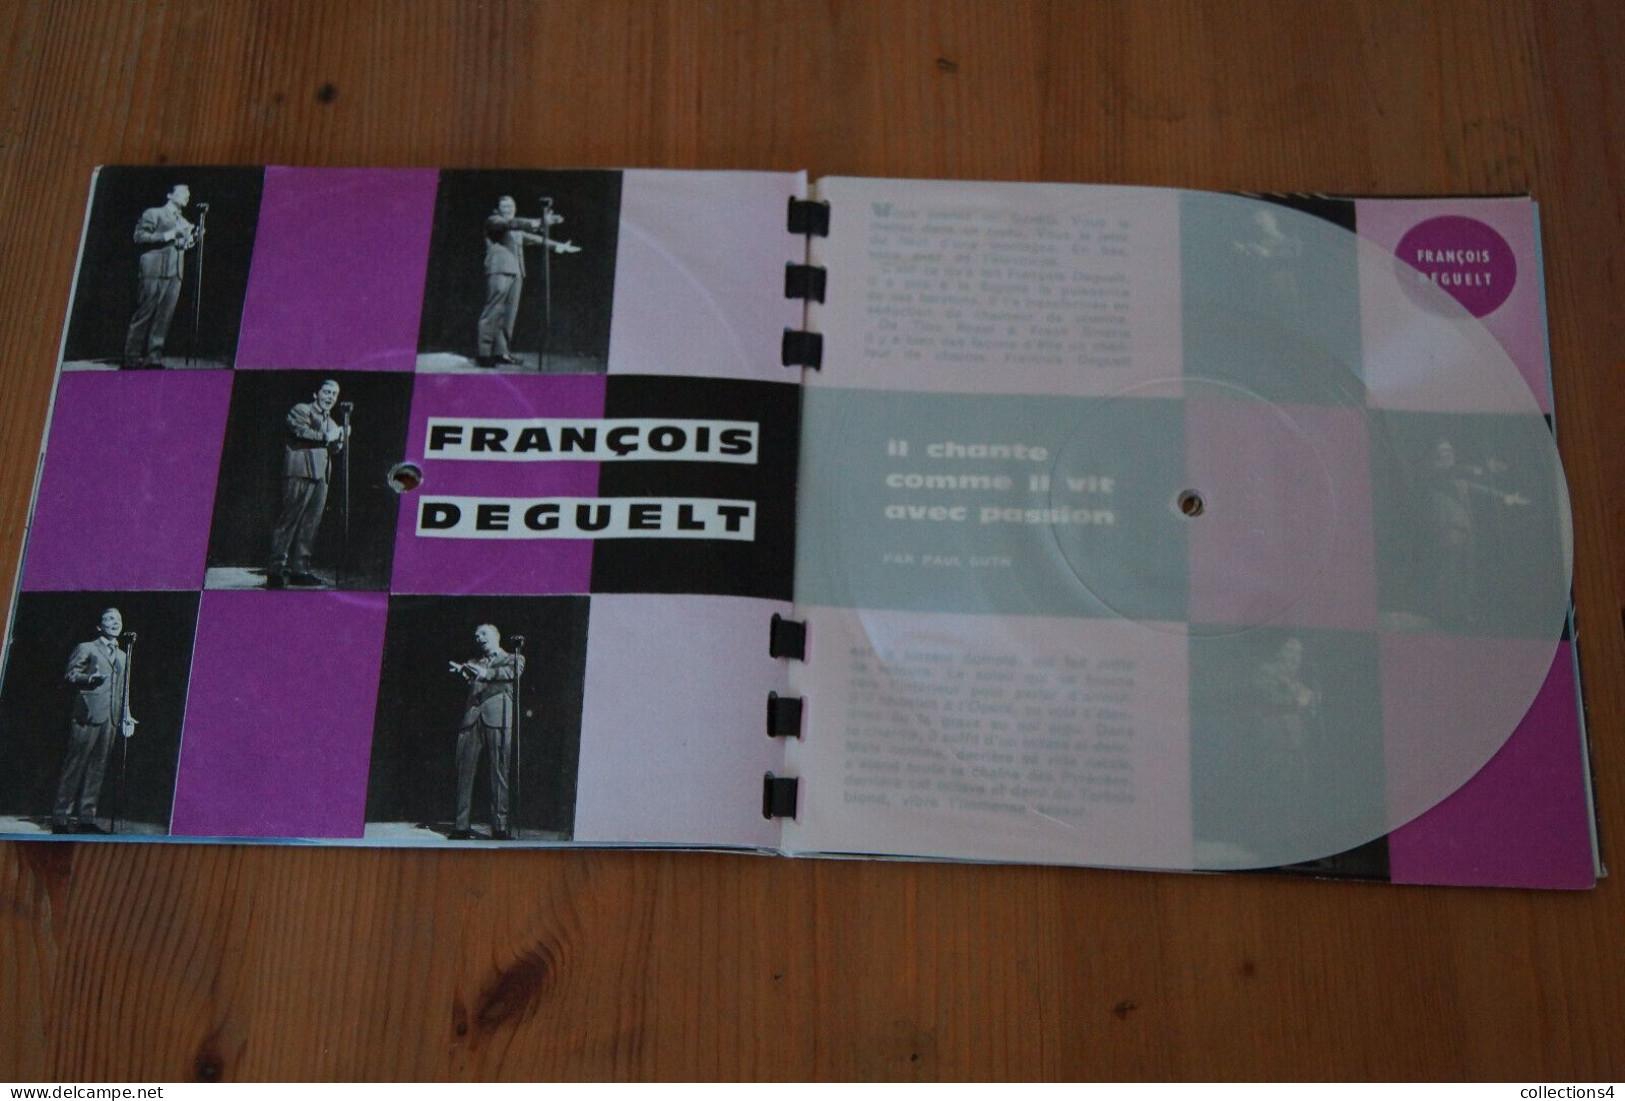 SONORAMA N° 24 NOV 1960 ANNIE GIRARDOT RICHARD ANTHONY FRANCOIS DEGUELT ET + - Speciale Formaten